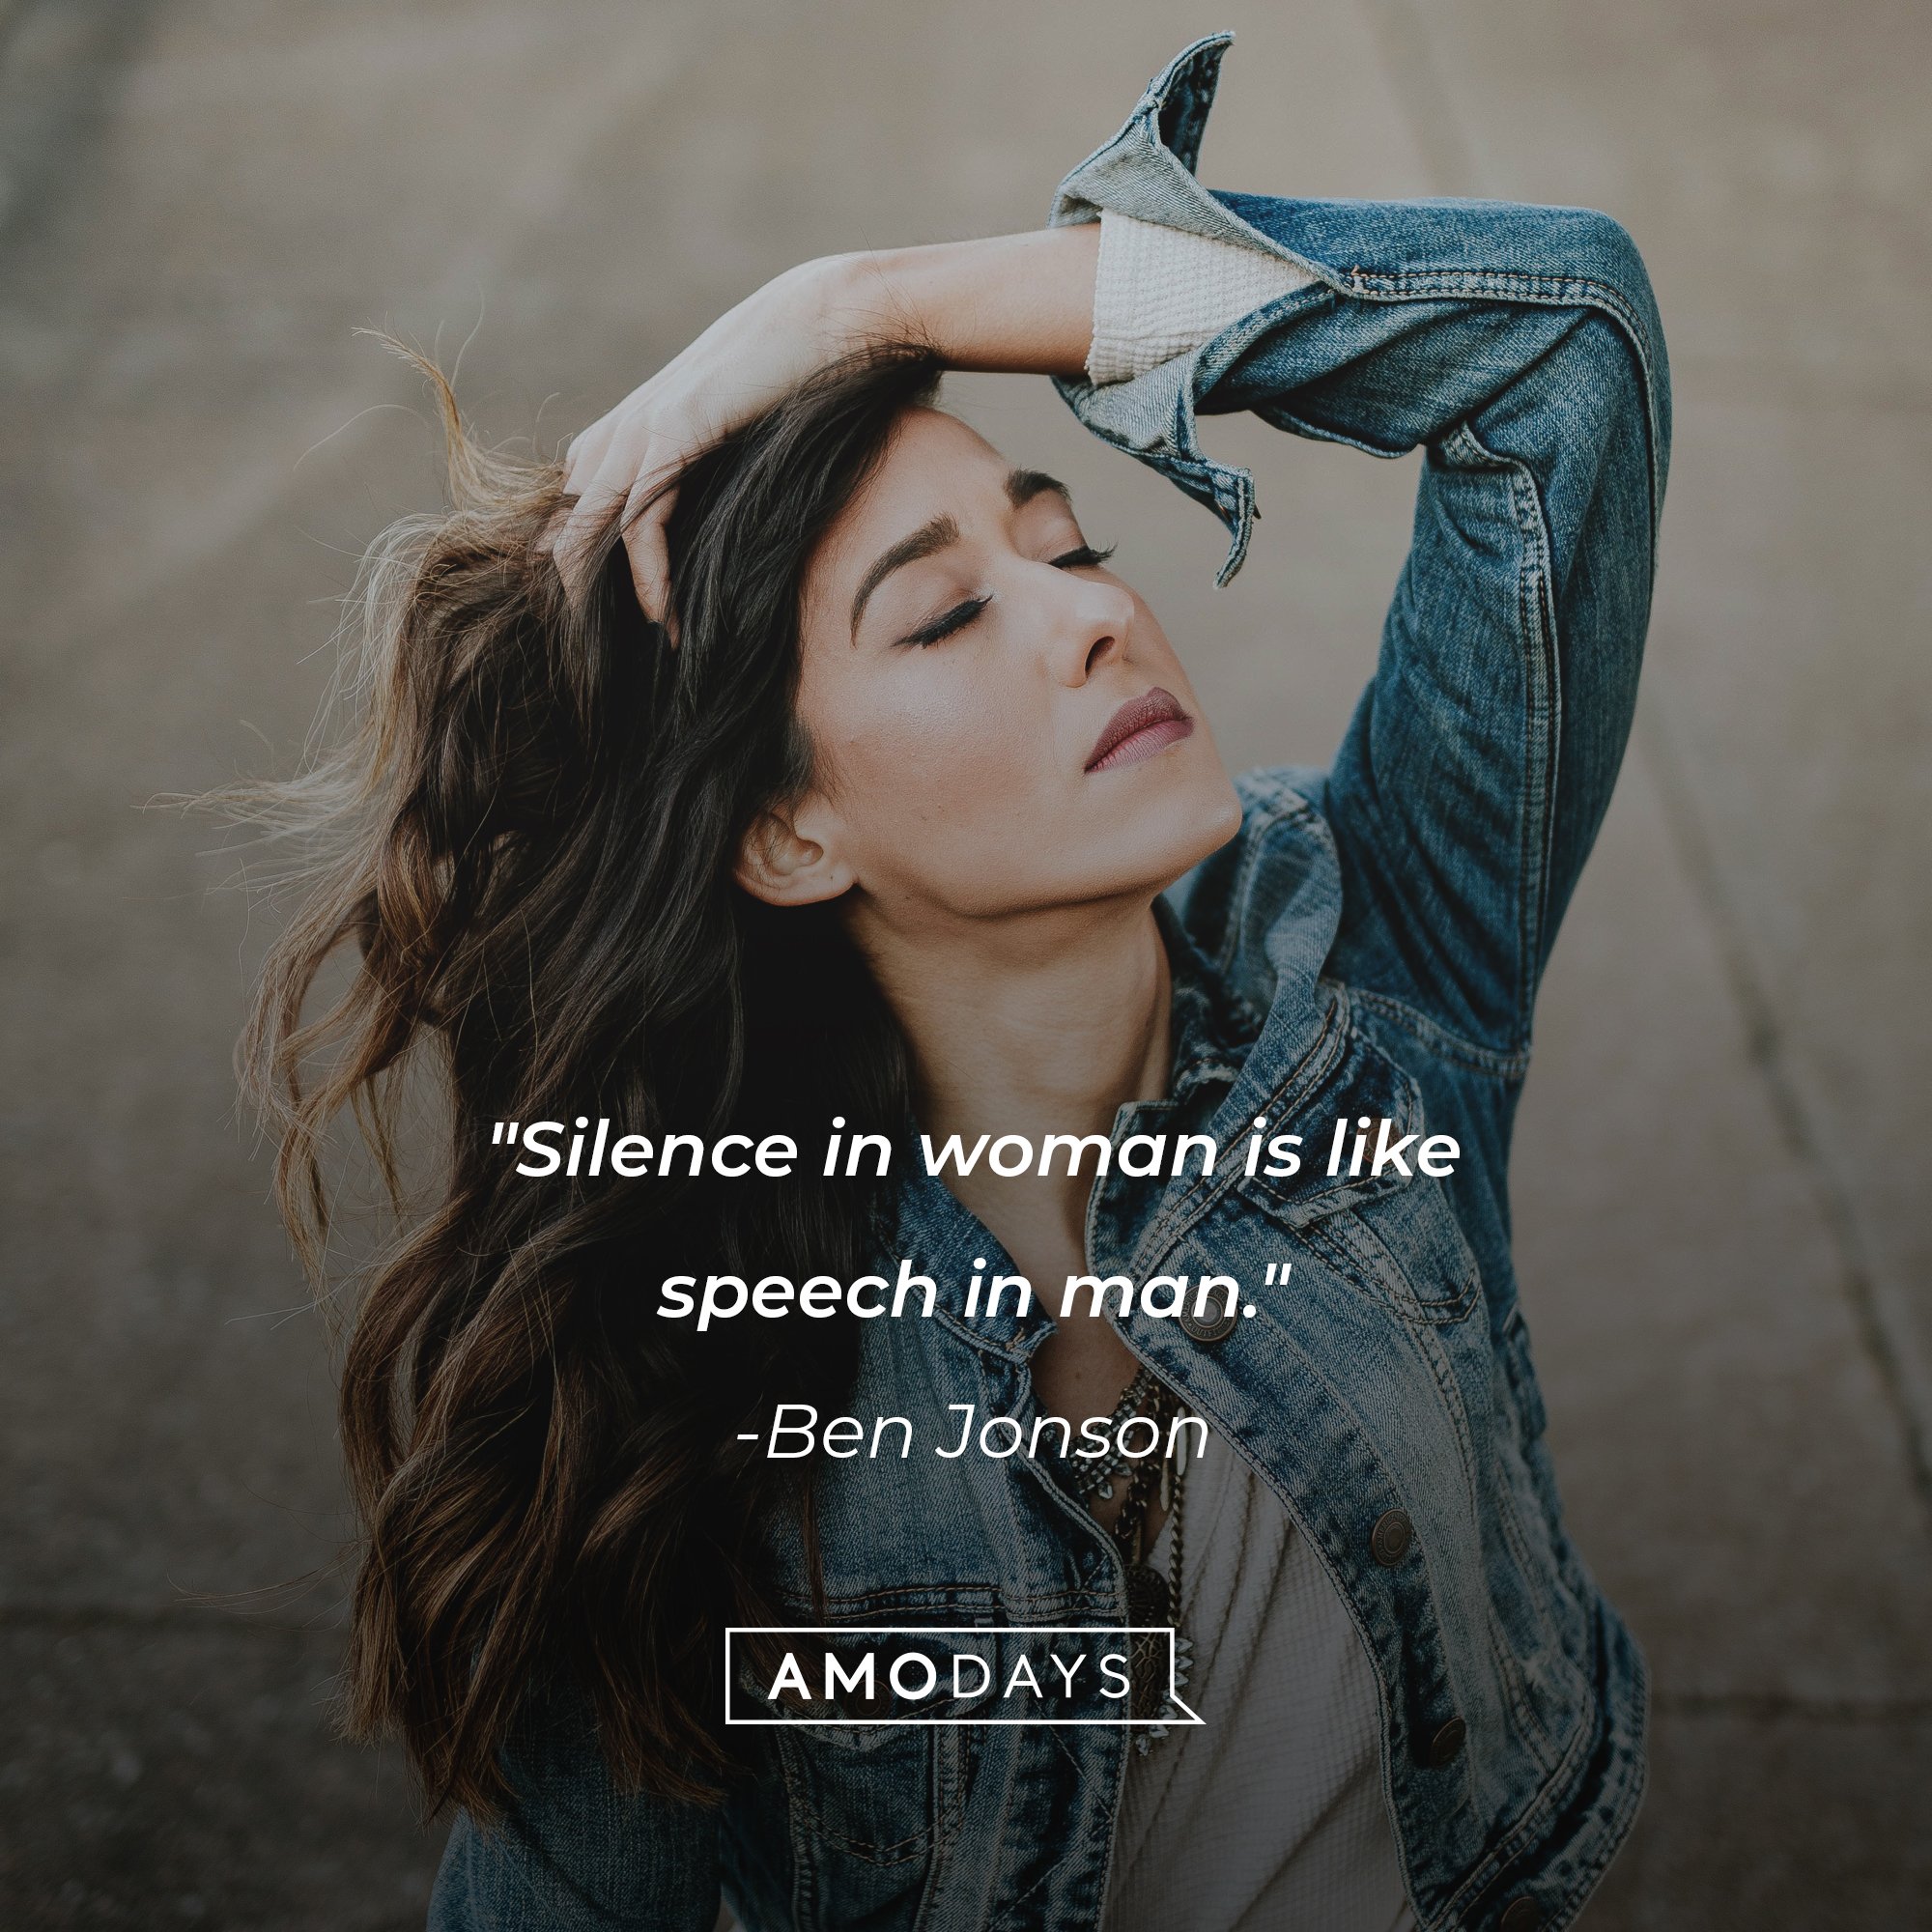 Ben Jonson’s quote: "Silence in woman is like speech in man." | Image: AmoDays